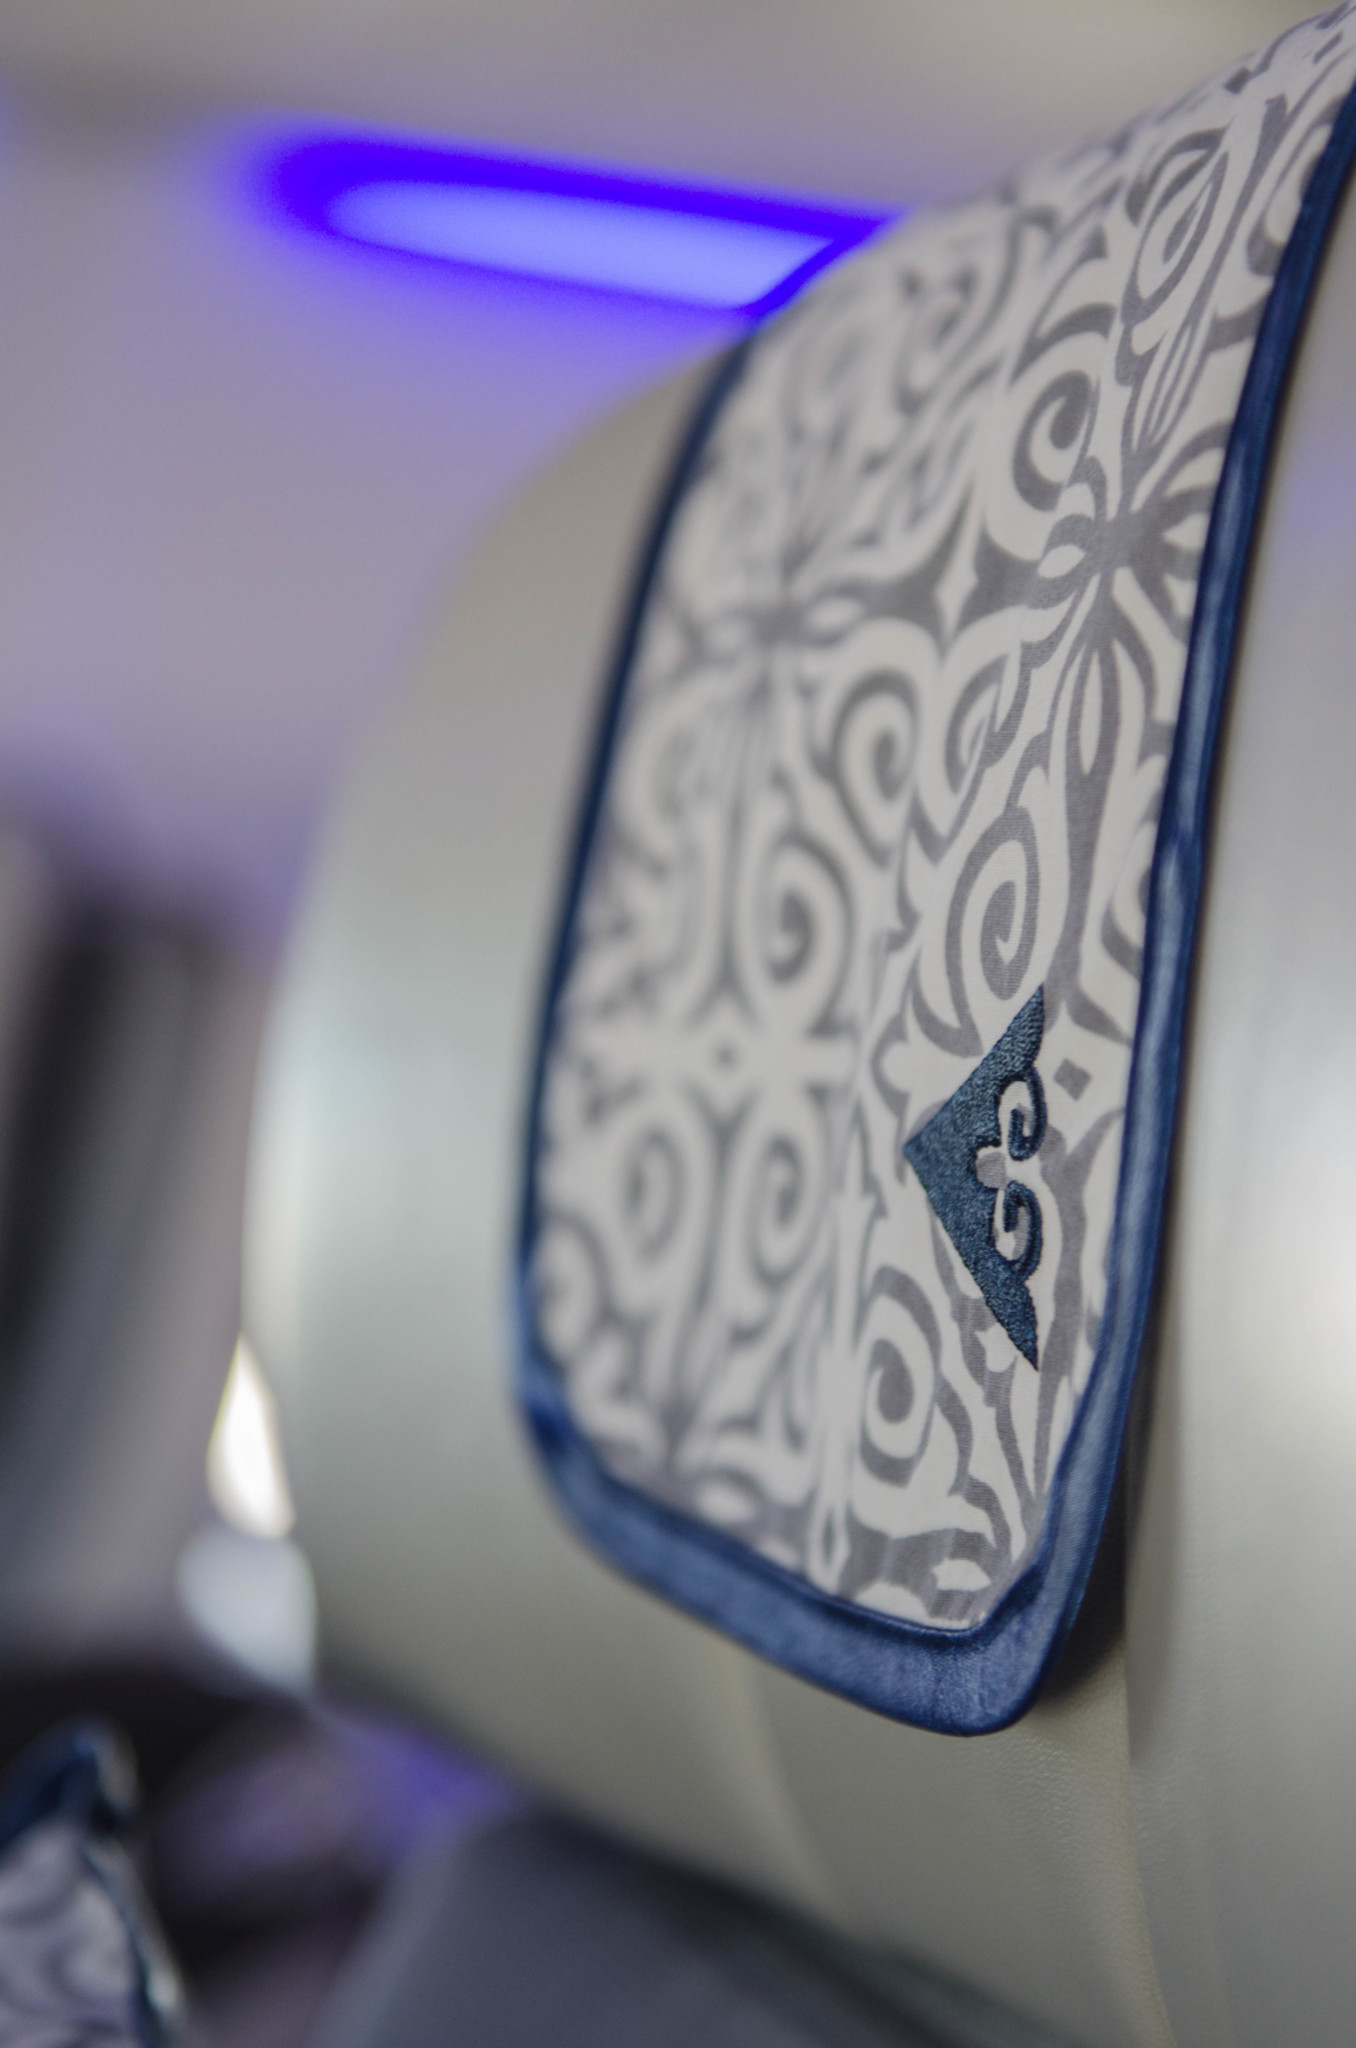 Schickes Design bei Air Astana